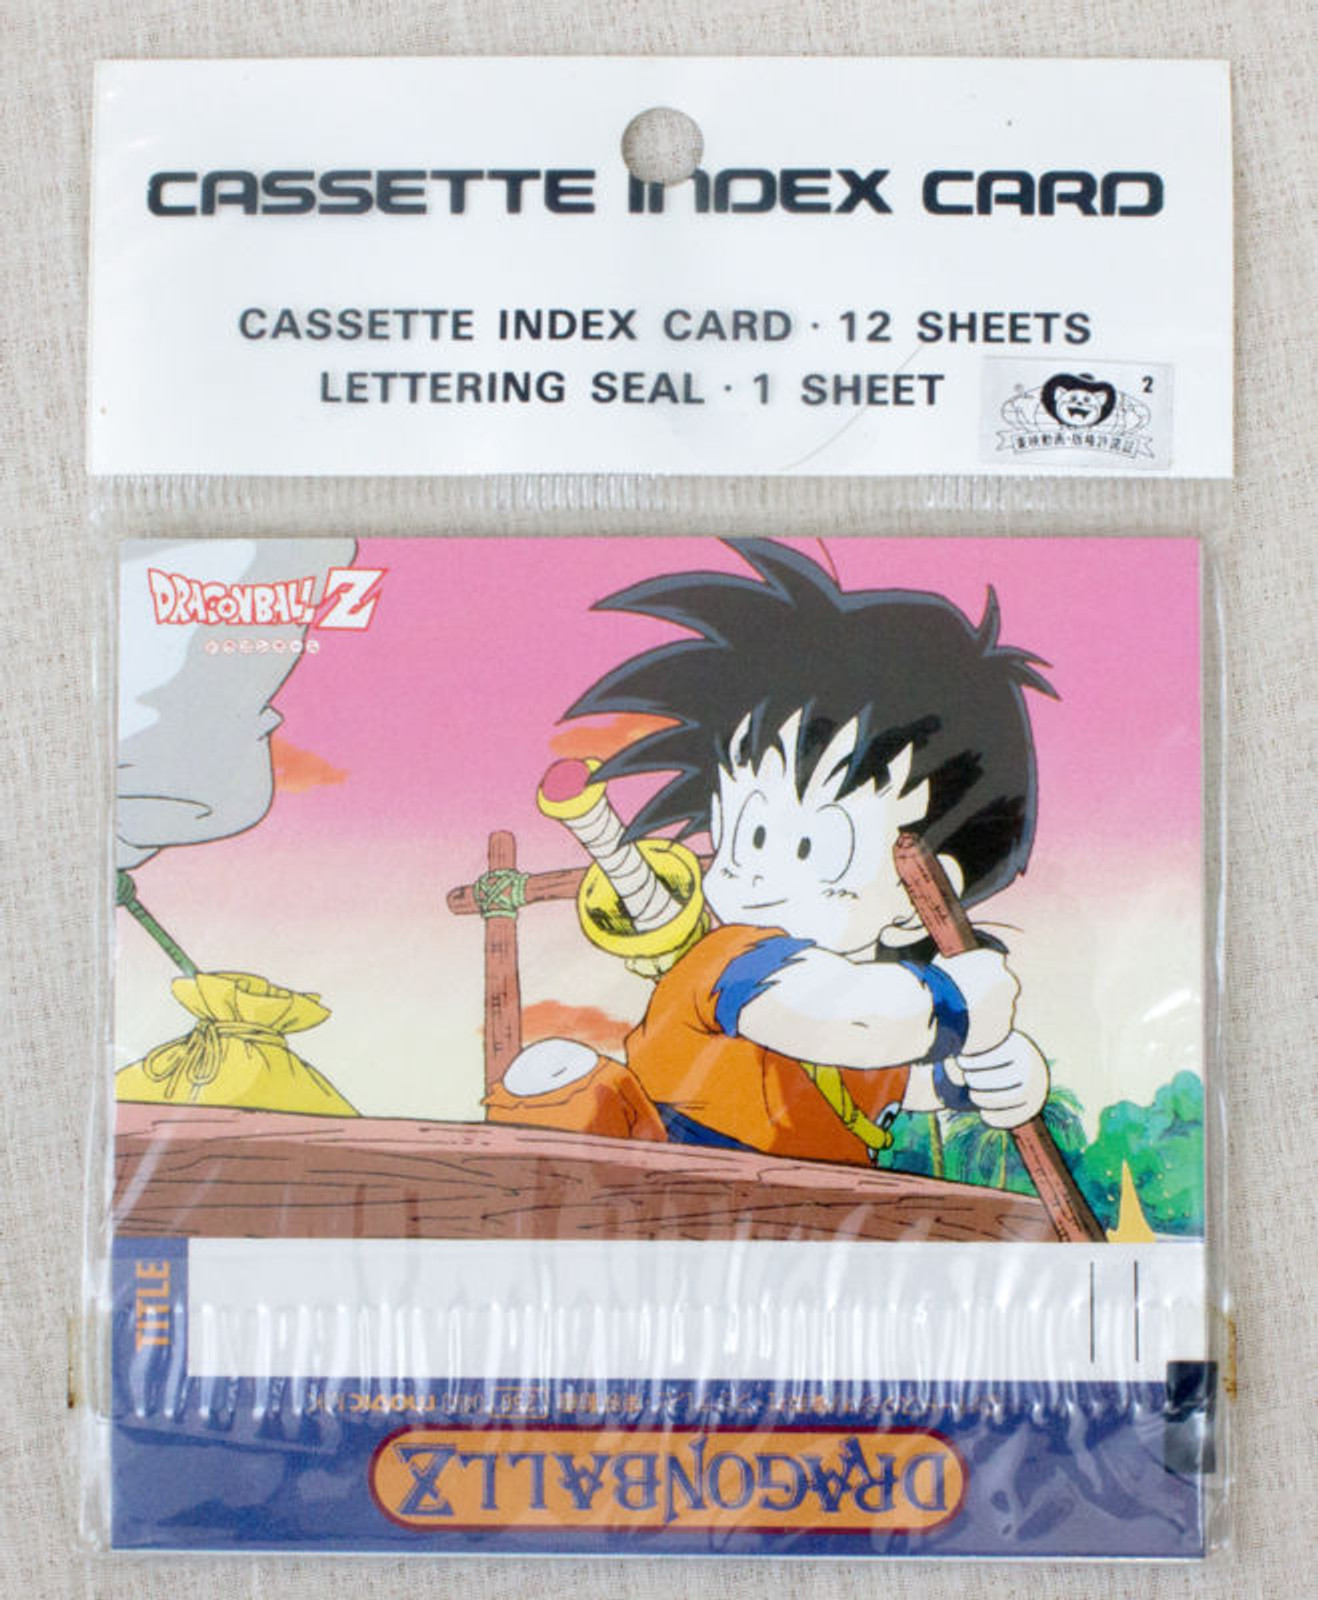 Dragon Ball Z Cassette Index Card + Stickers JAPAN ANIME MANGA